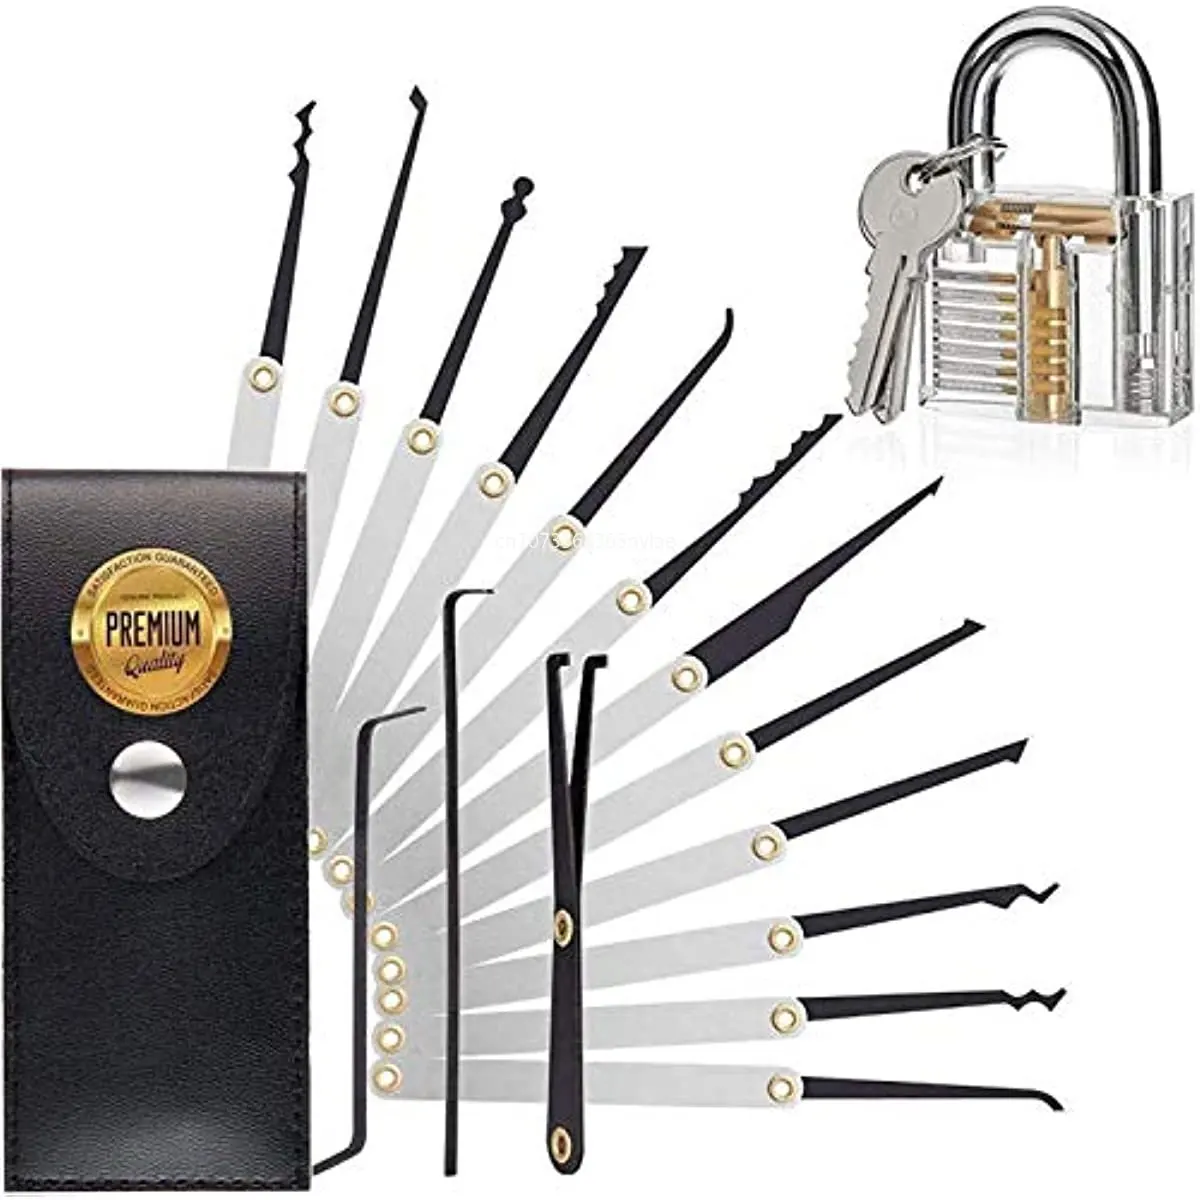 

15 unlocking kit tools with transparent training padlocks and key extraction tools